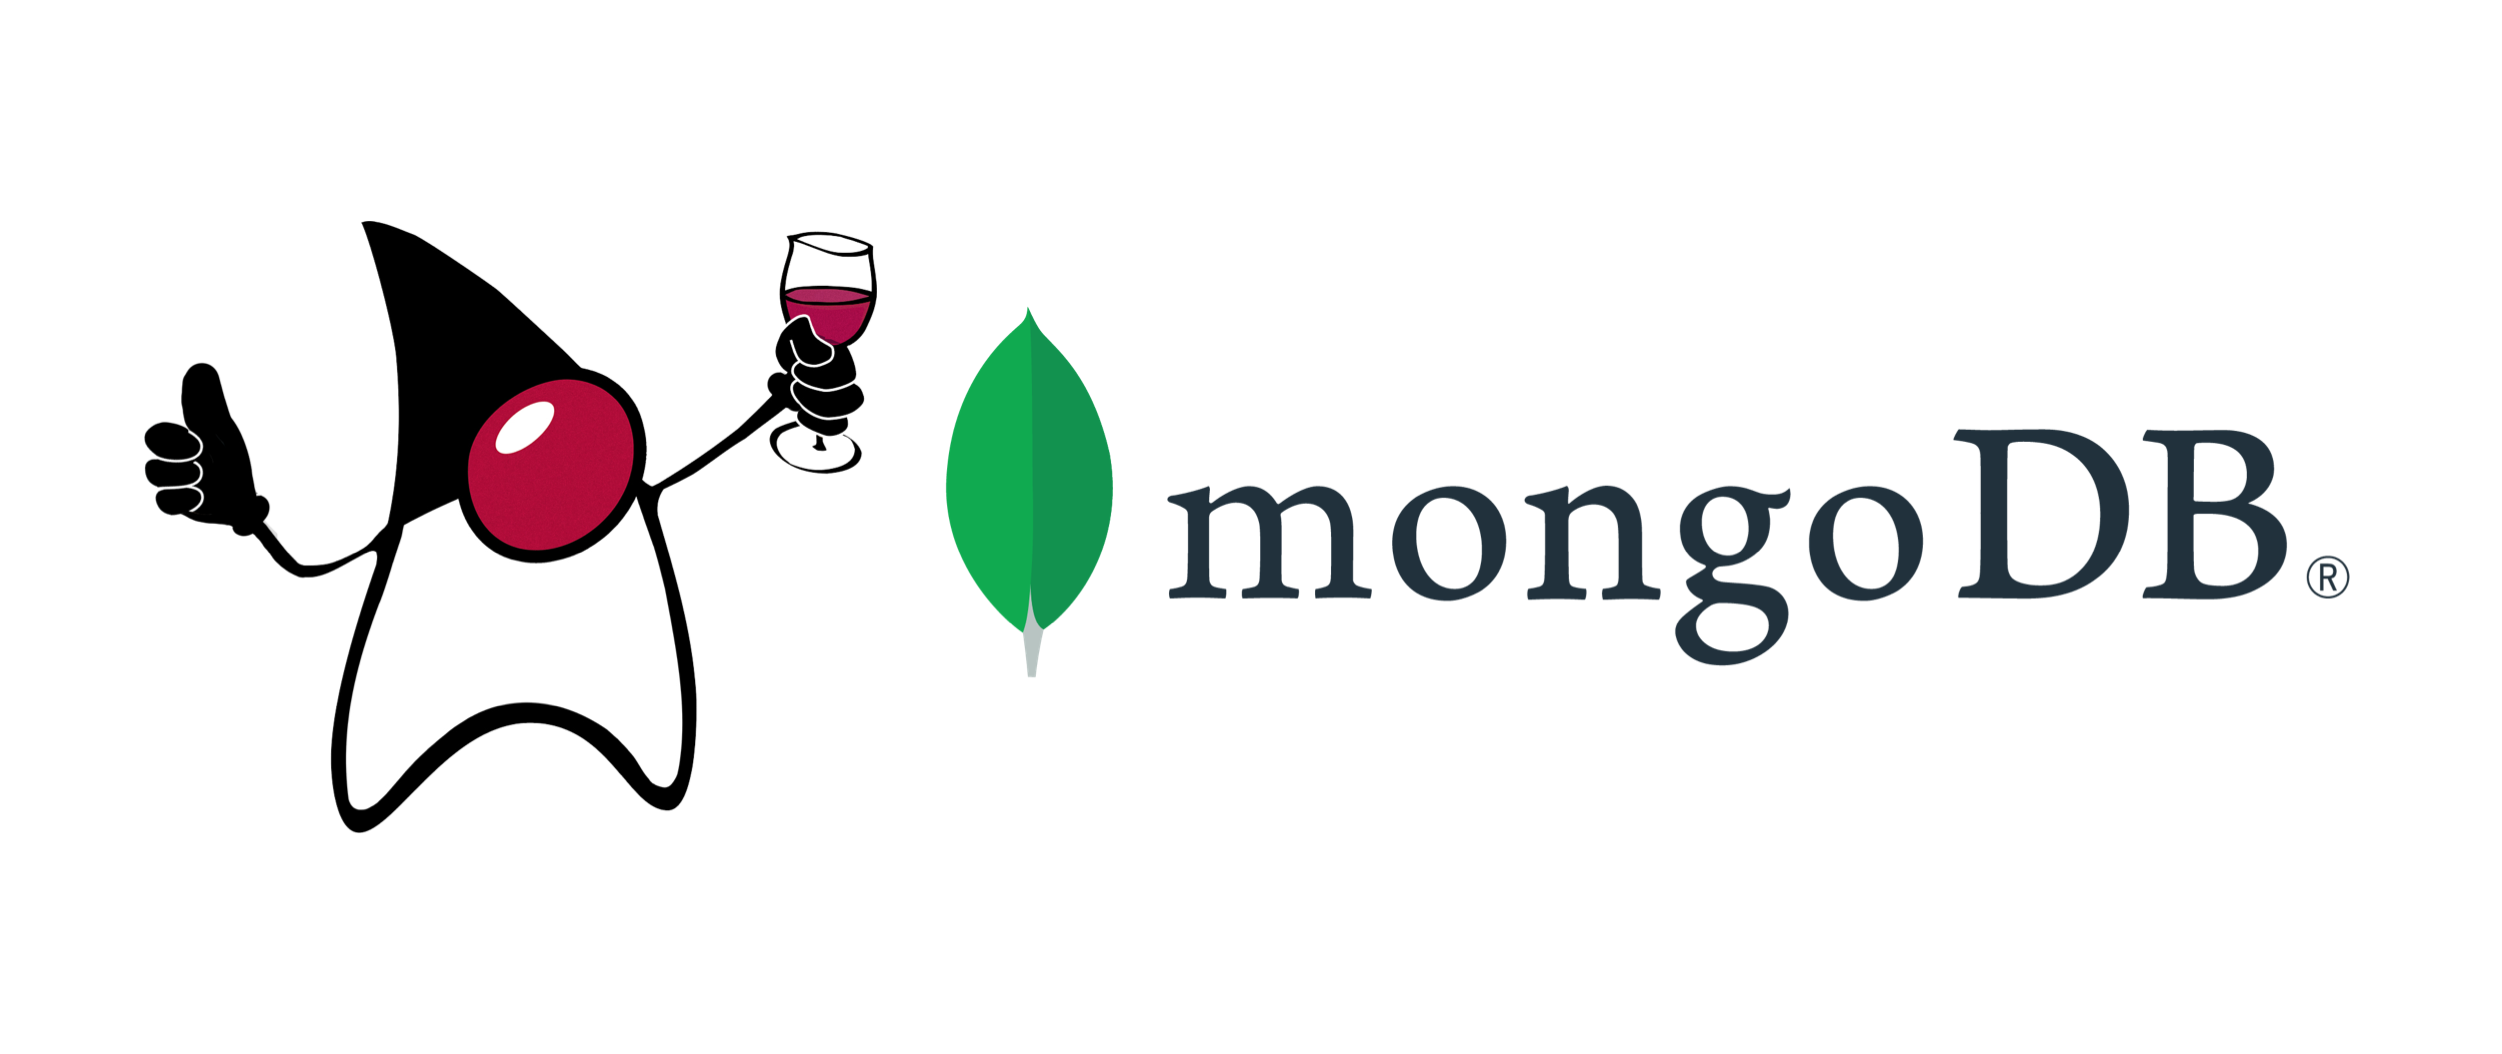 Duke raises a glass to MongoDB